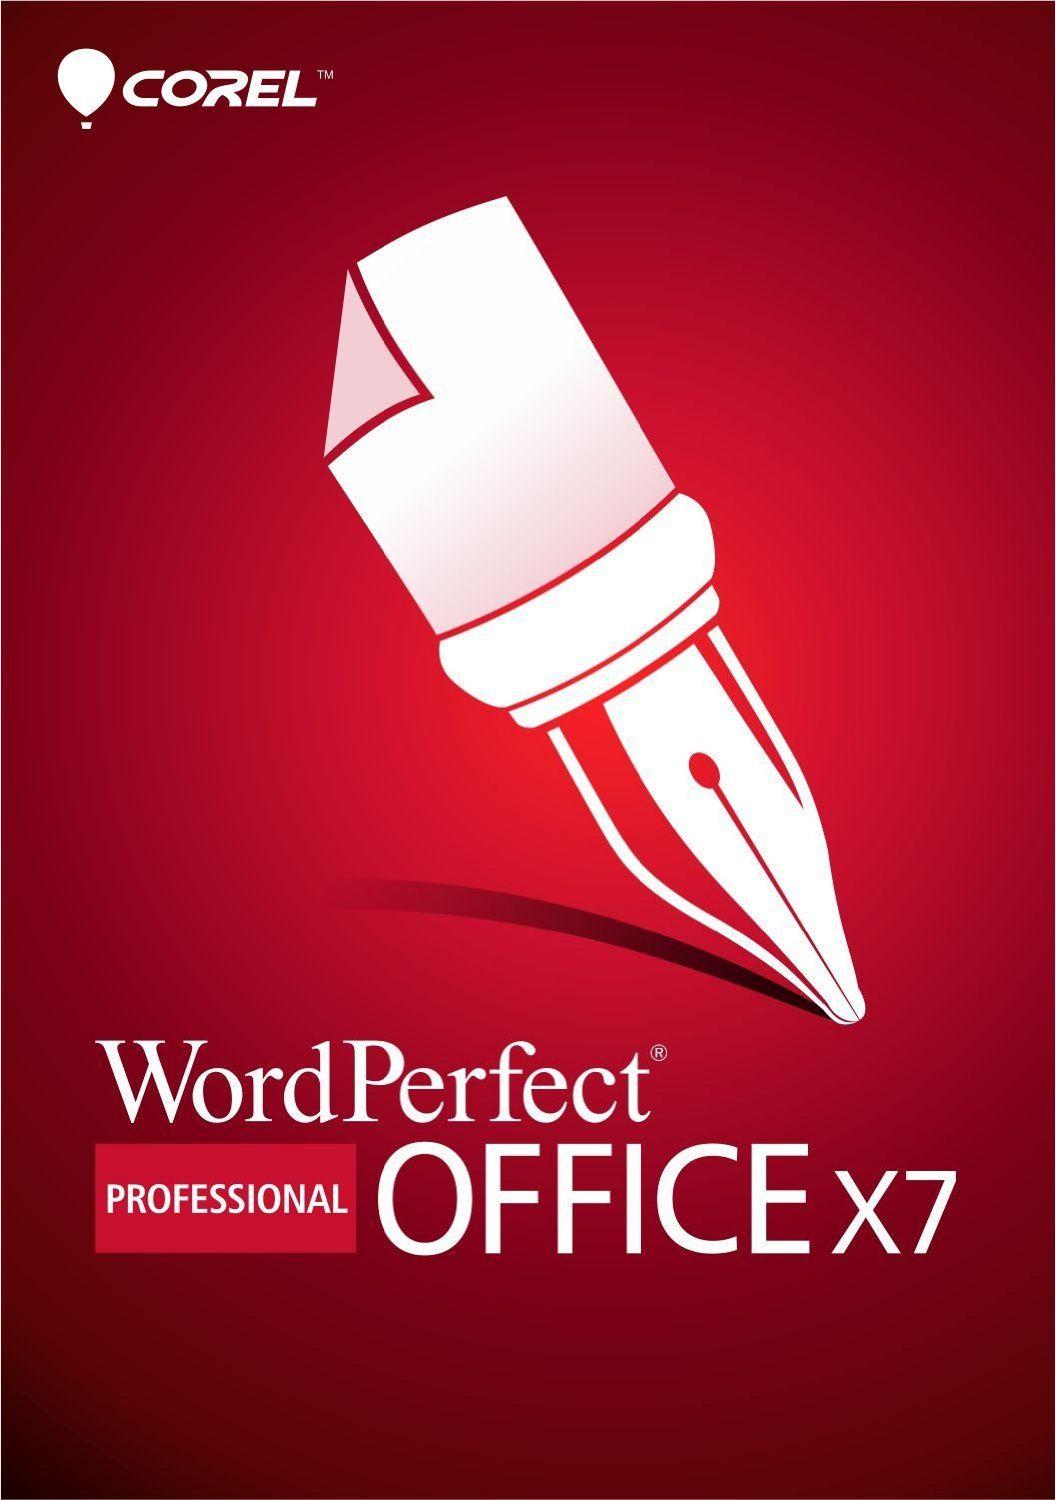 WordPerfect Logo - Corel Office X7 Pro Upgrade #C200 2592